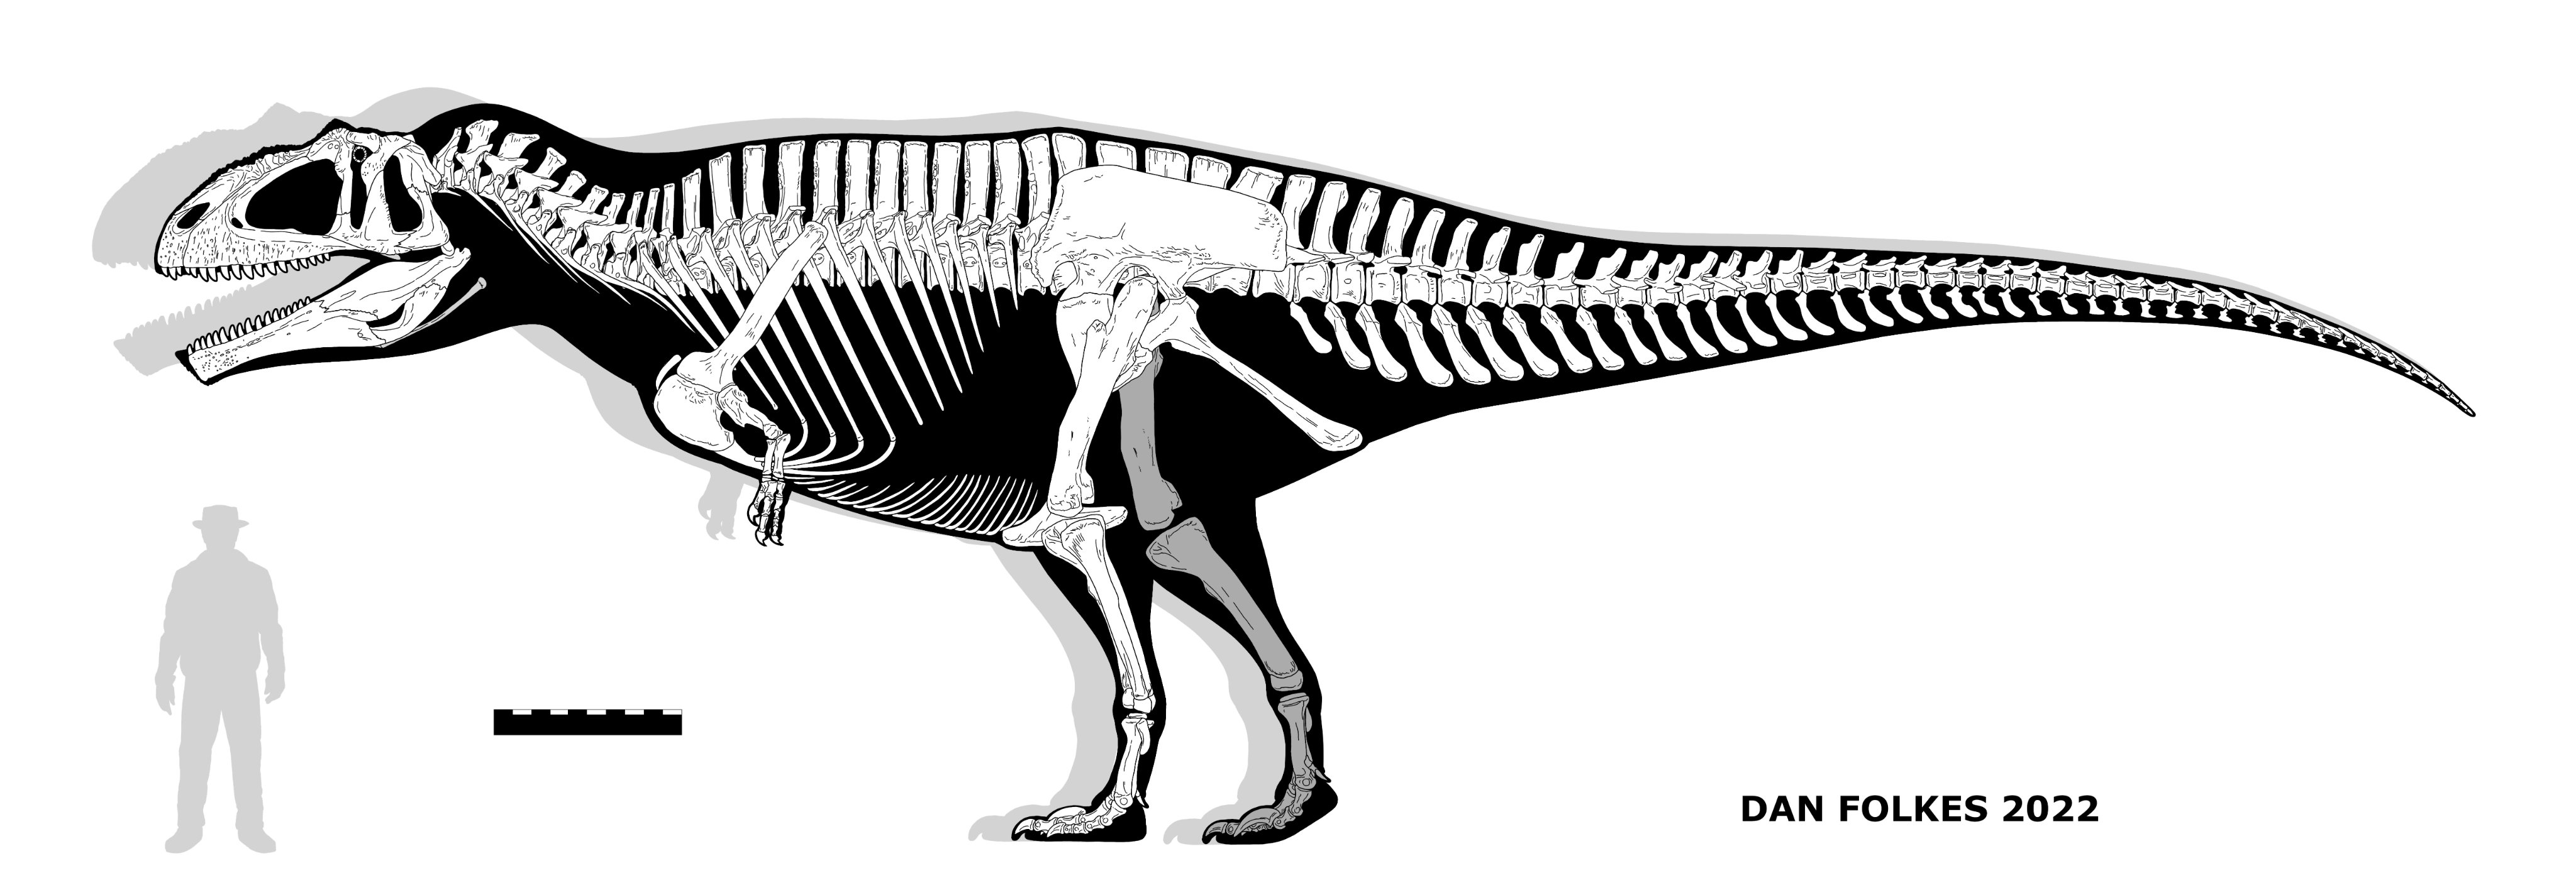 Giganotossauro (Jurassic World), Wikia Liber Proeliis